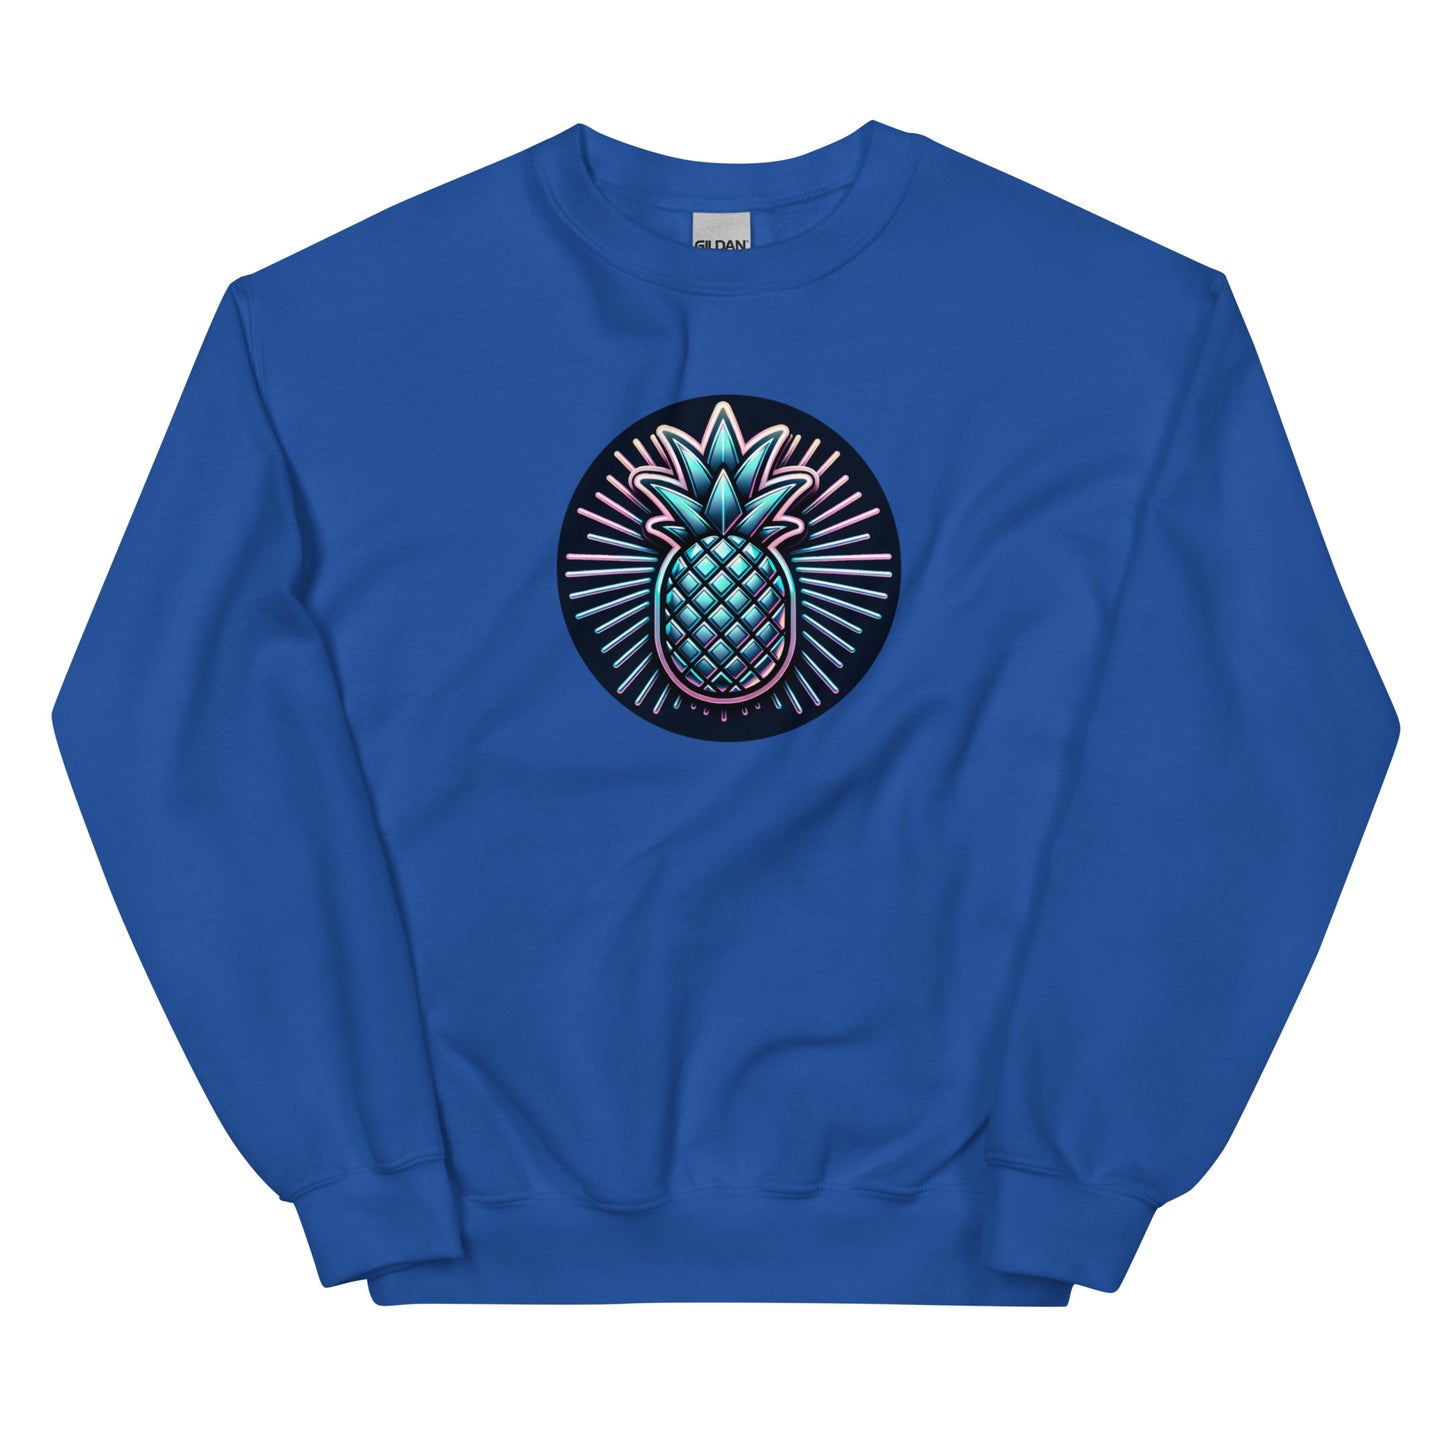 Shopijo’s Cool Graphic Pineapple Unisex Sweatshirt